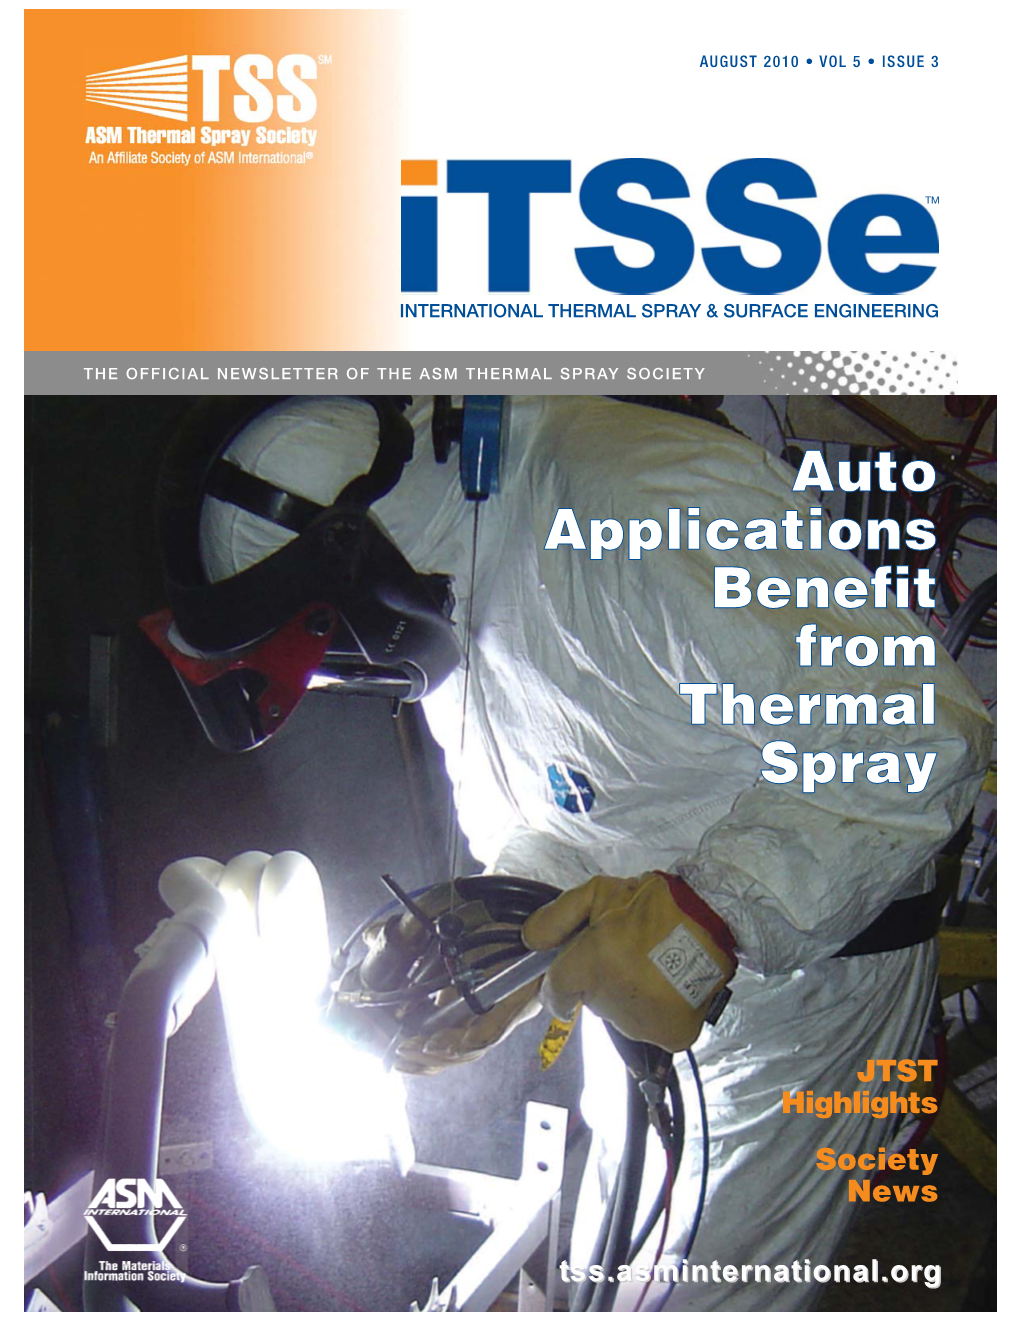 International Thermal Spray & Surface Engineering